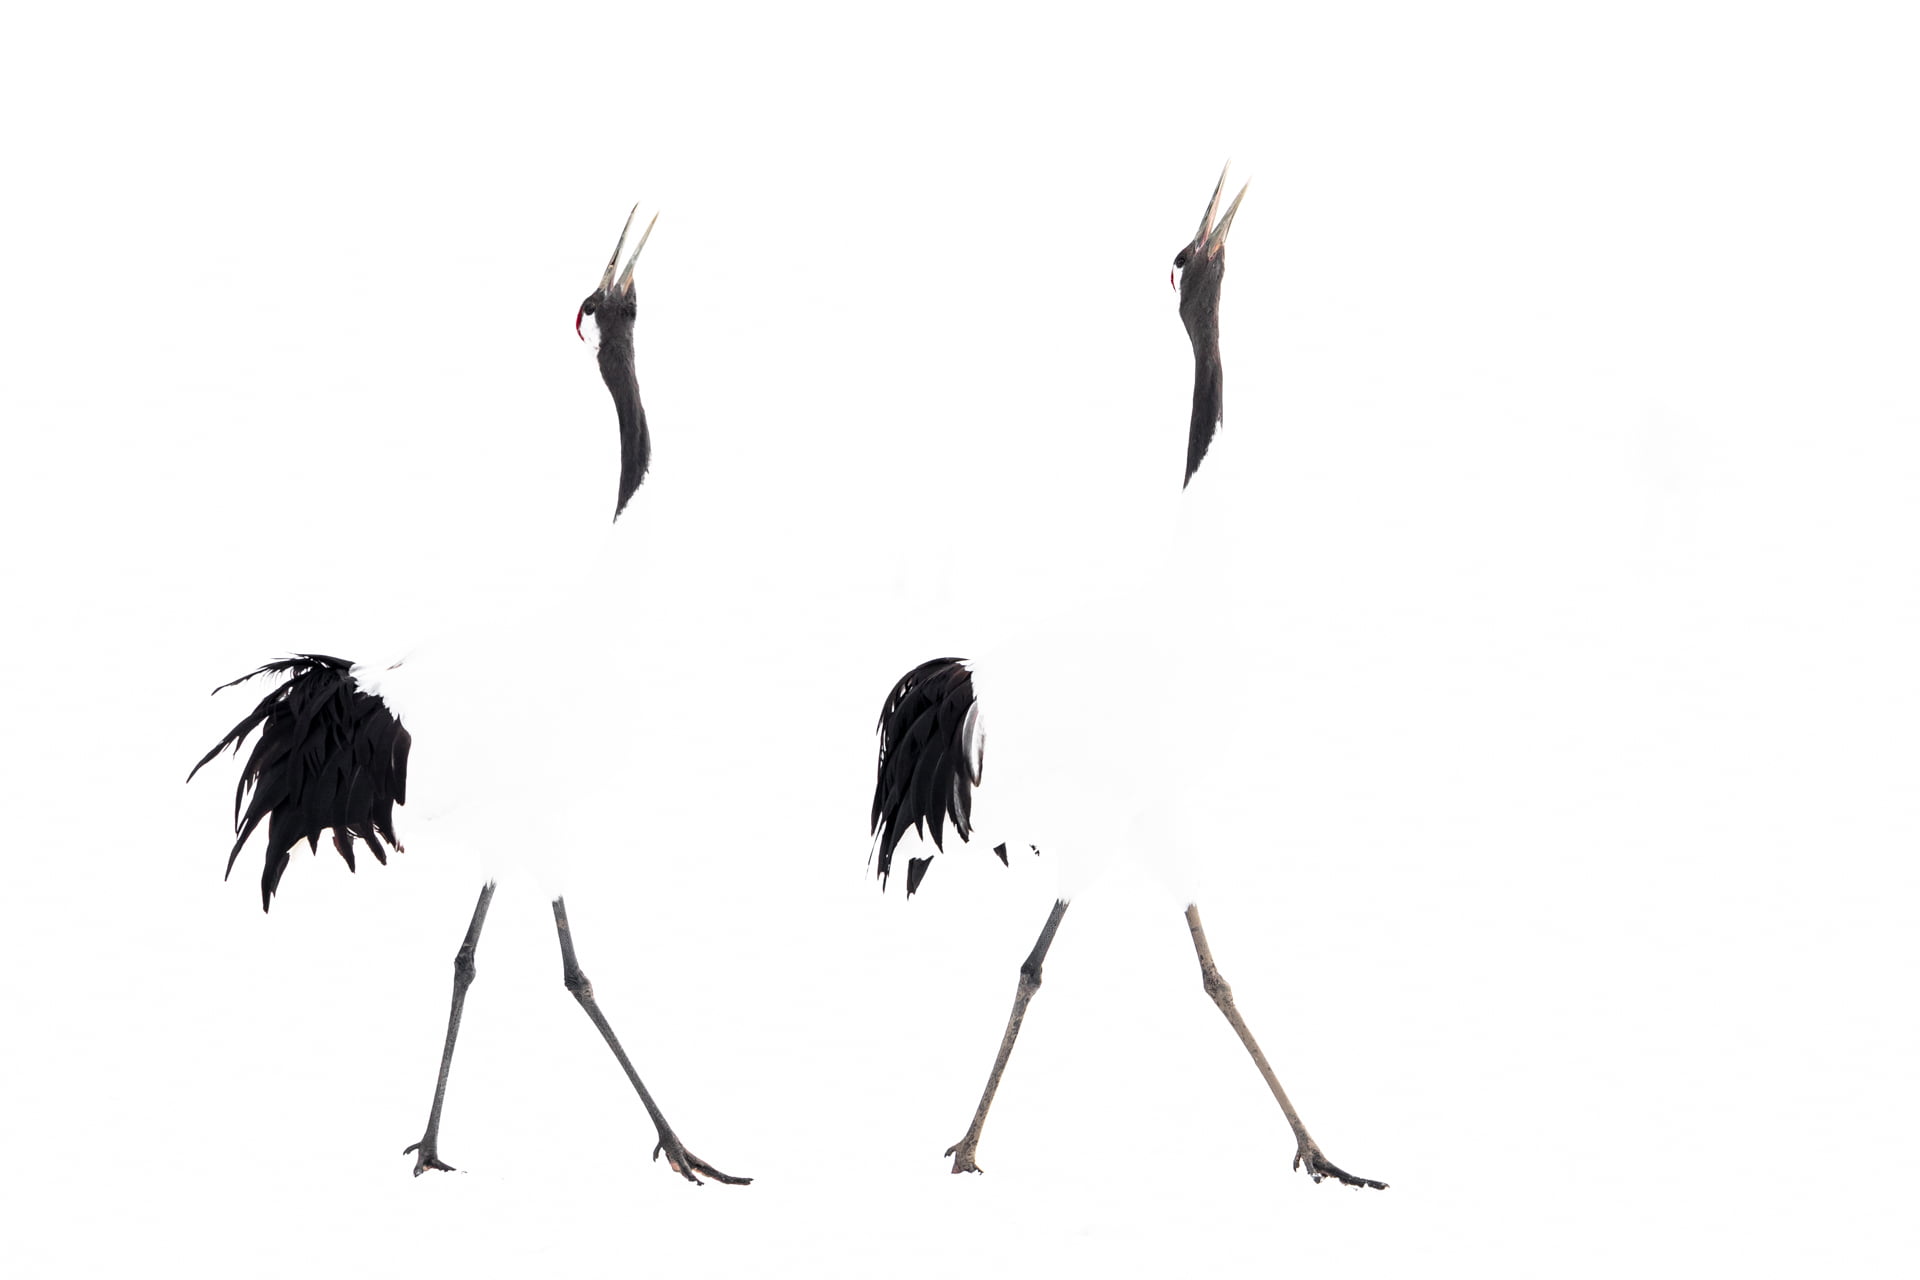 Deux Grues du Japon, Hokkaido danse et chante, Japon - Two Red-crowned Crane, Hokkaido dance and sing, Japan / Grus japonensis